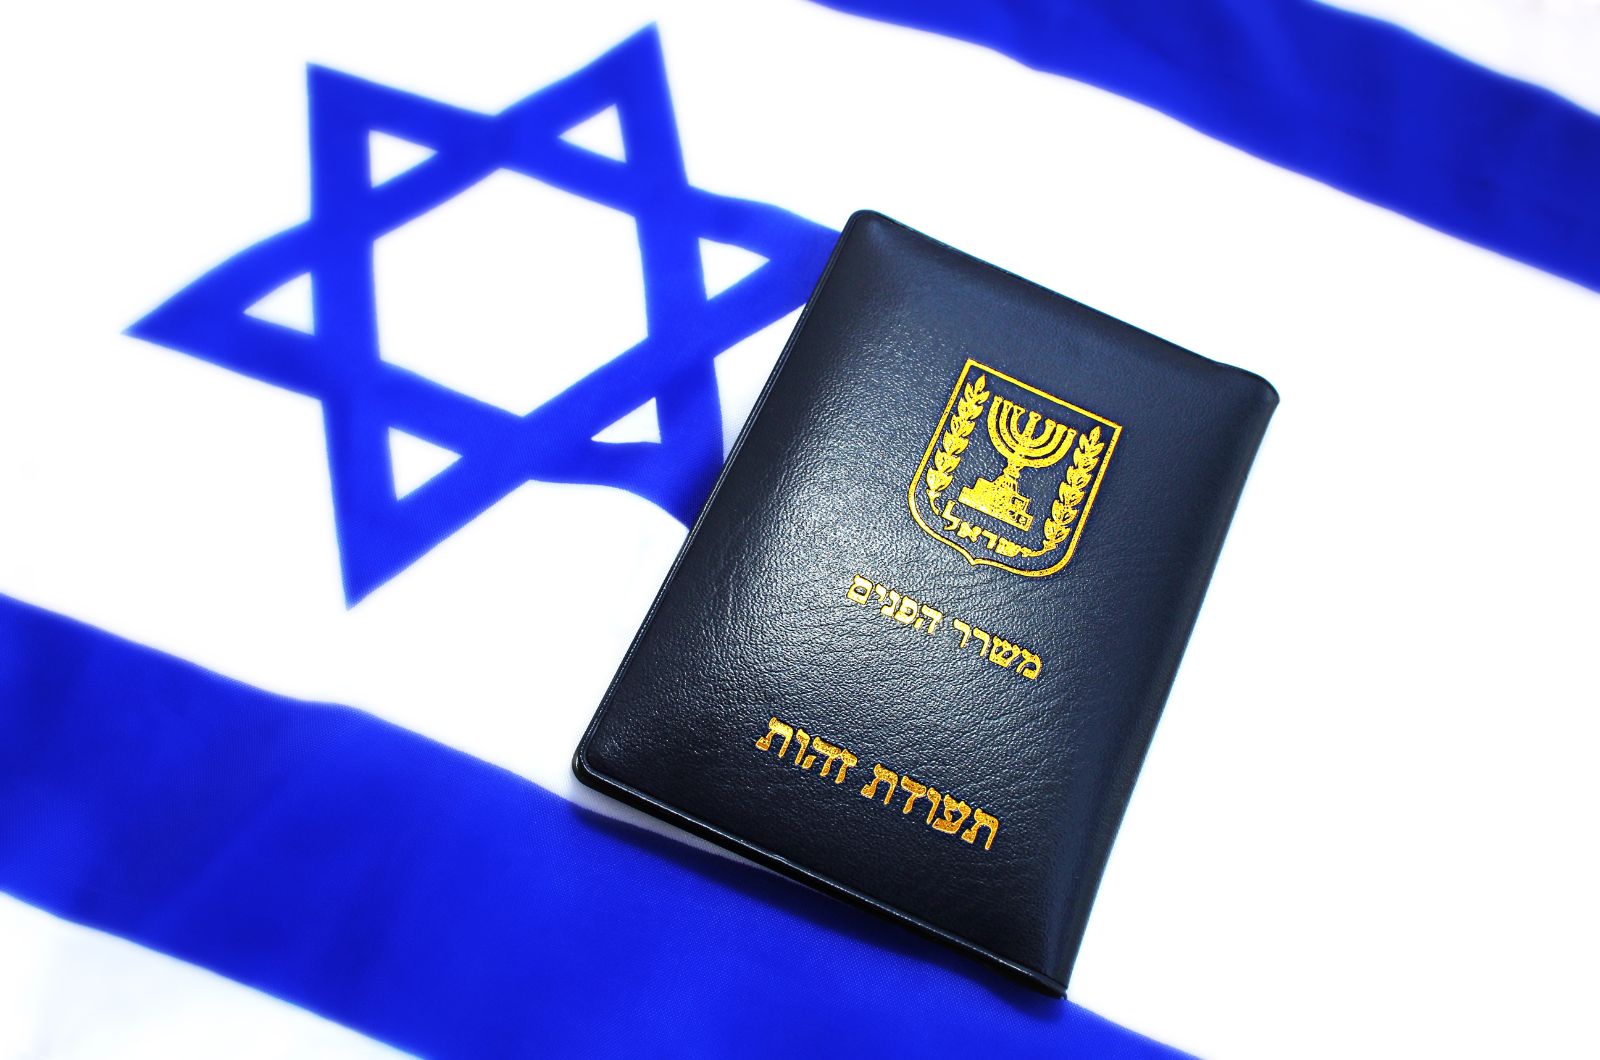 Israeli citizenship